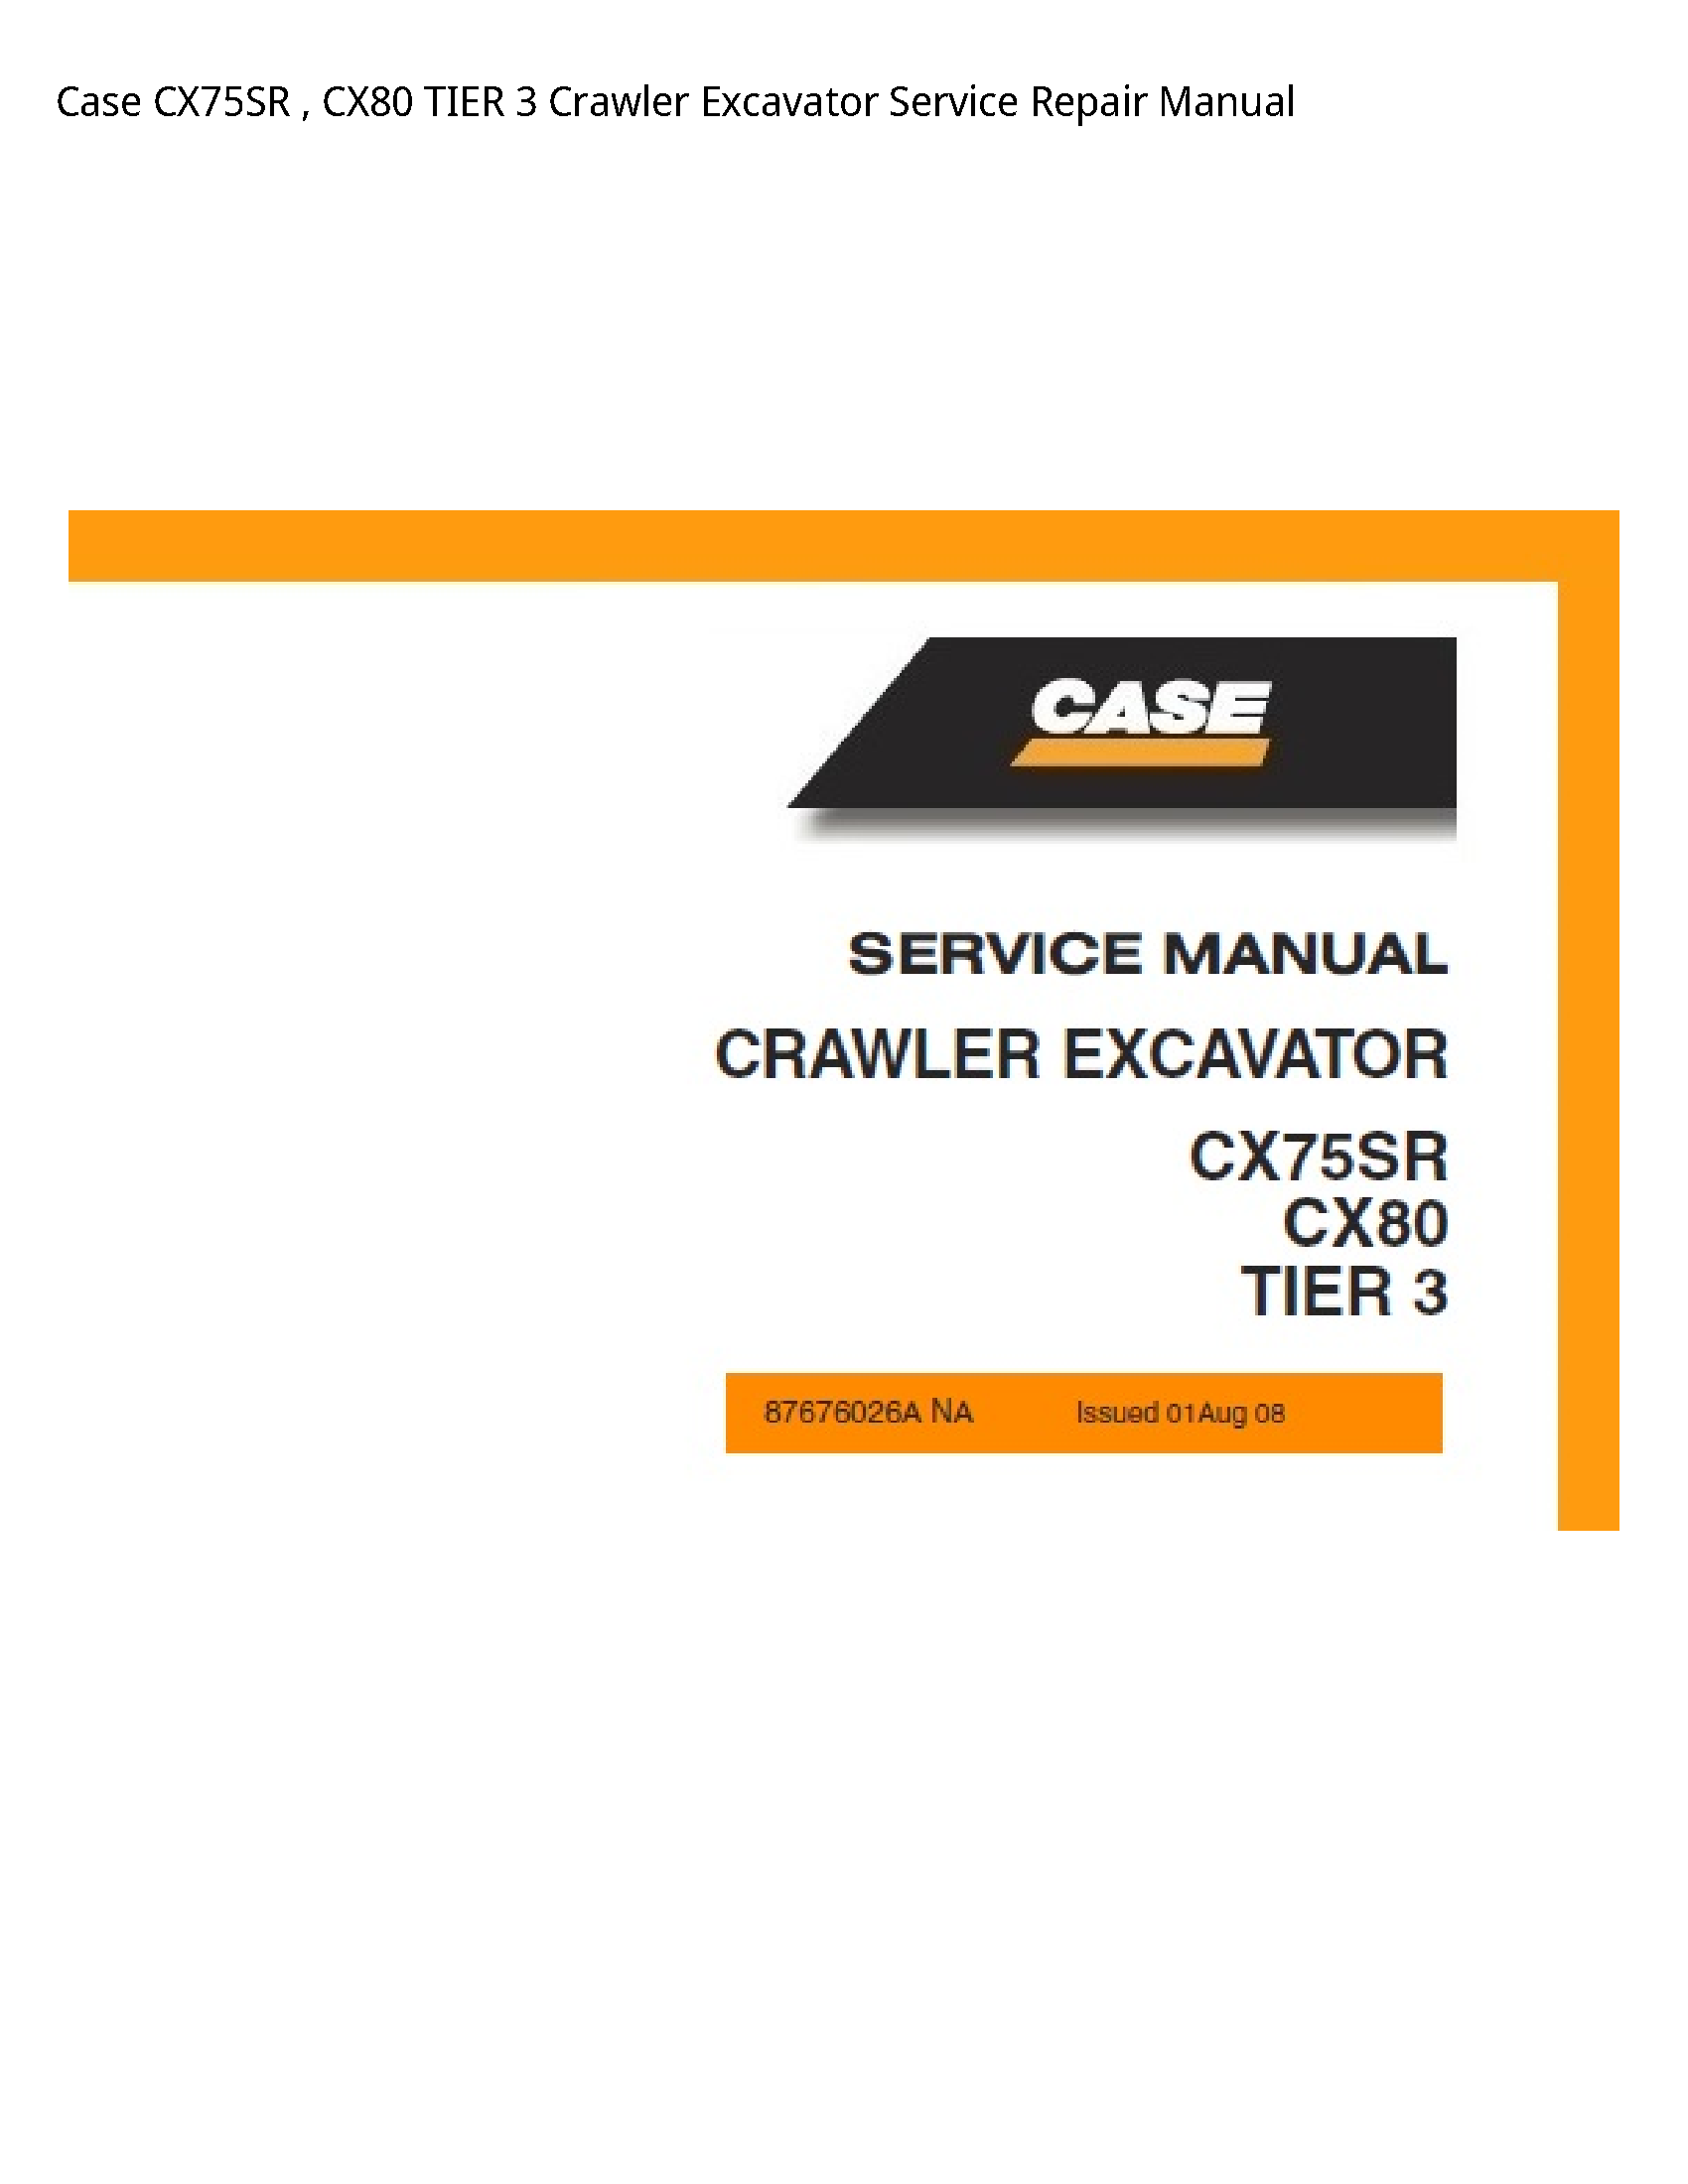 Case/Case IH CX75SR TIER Crawler Excavator manual